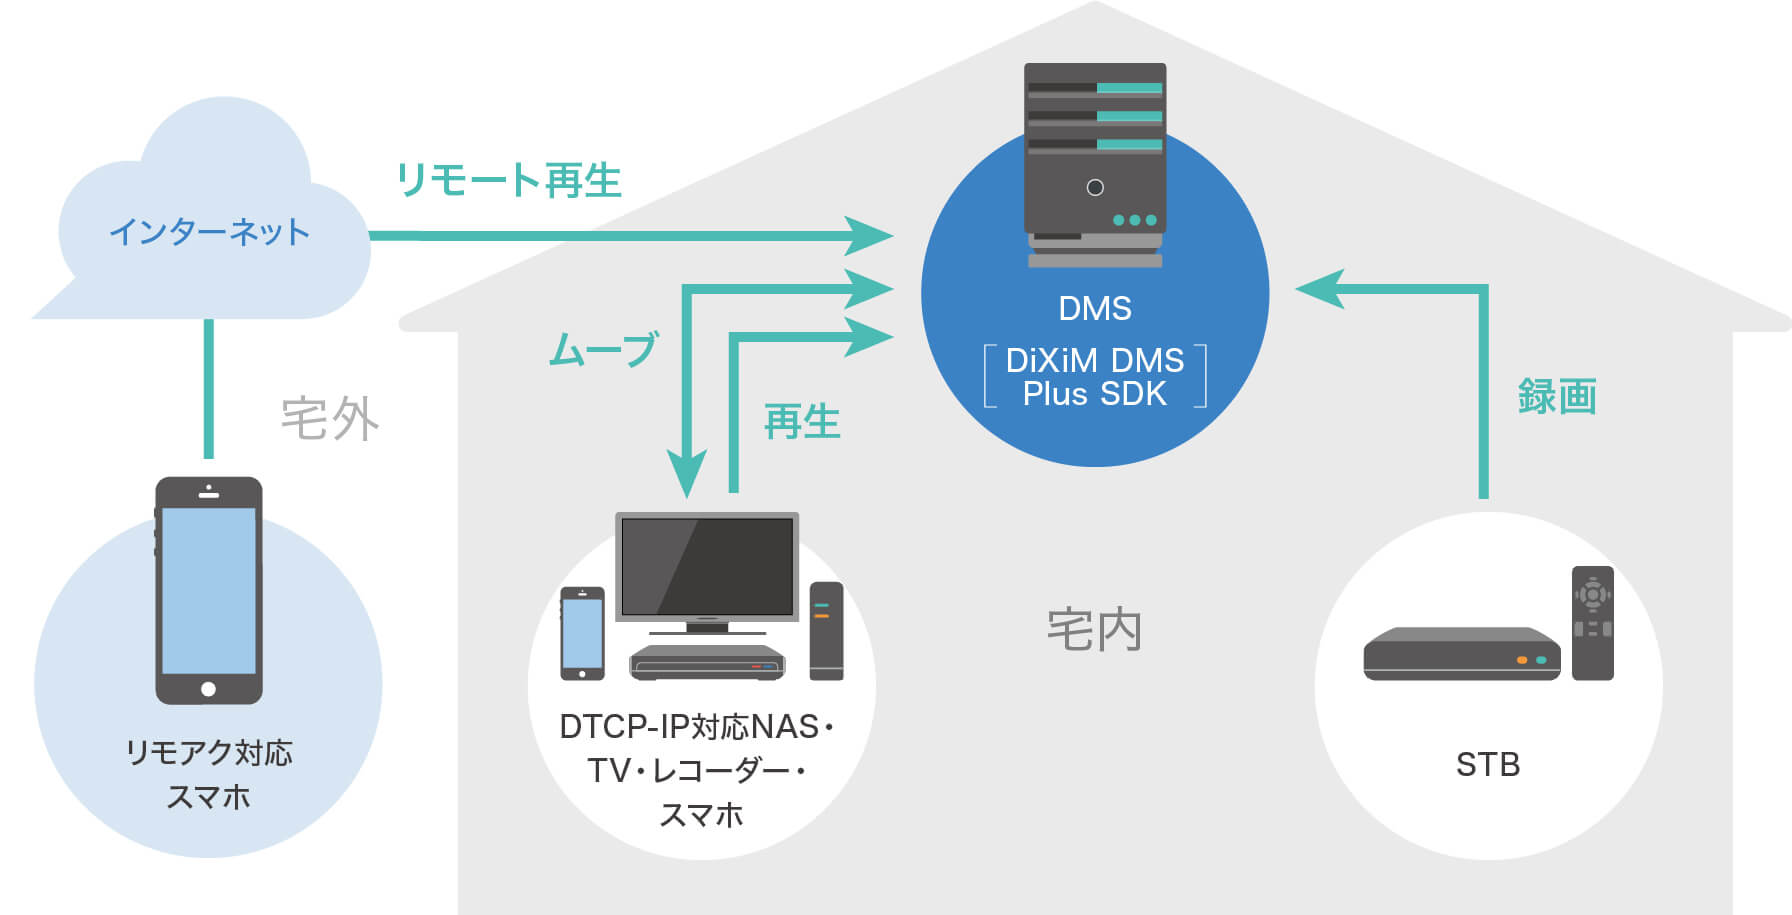 DiXiM DMS Plus SDK サービスイメージ